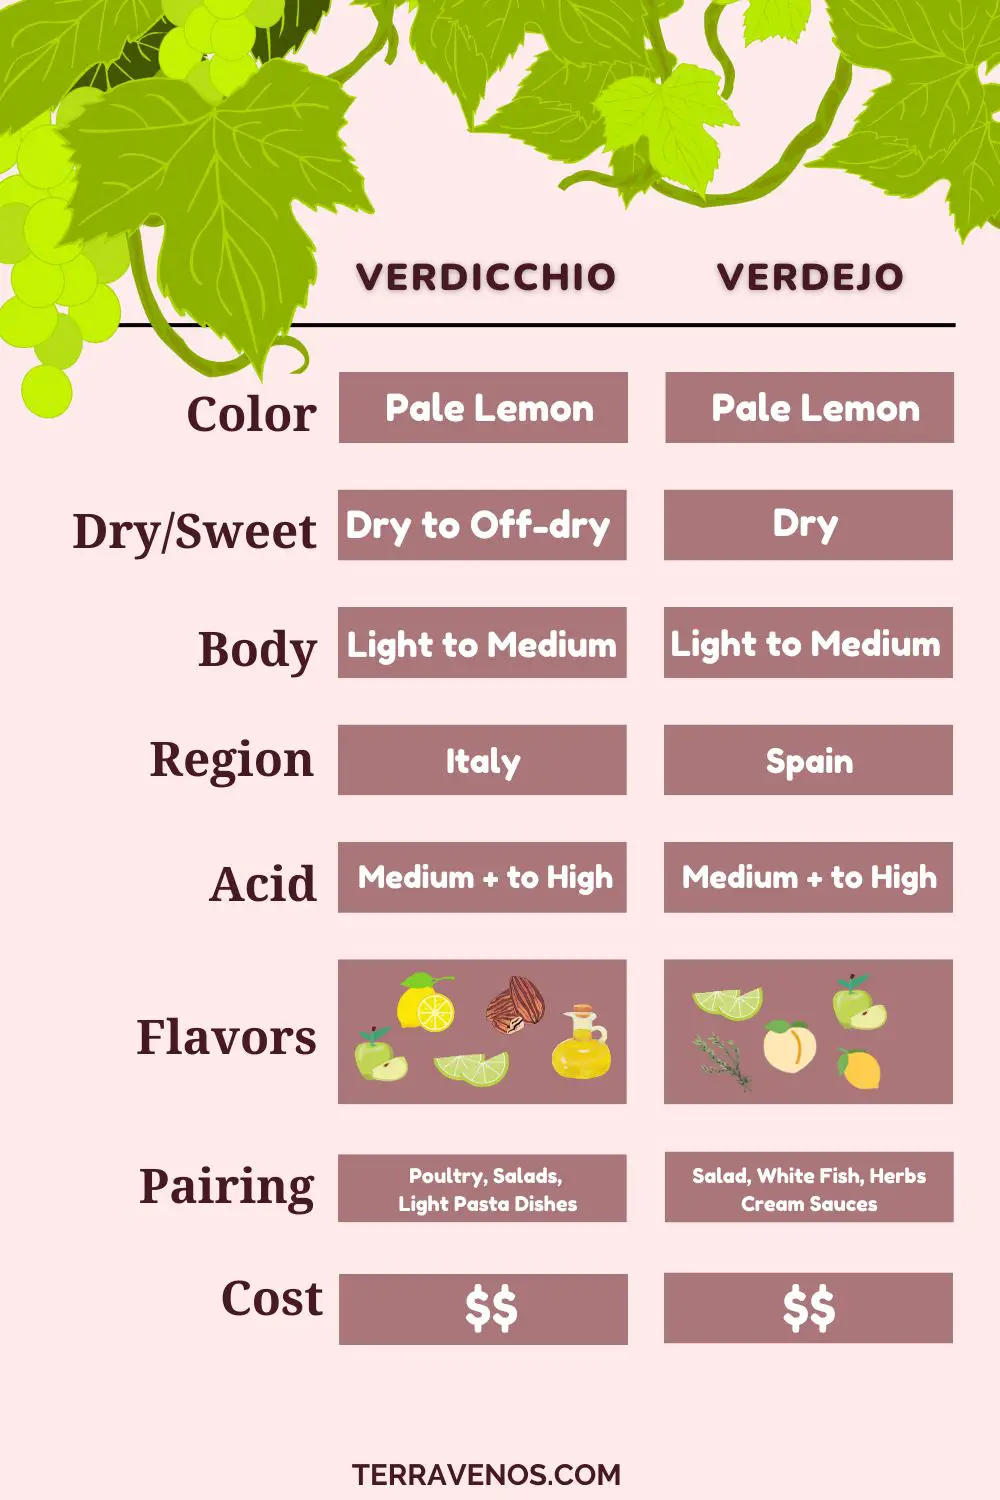 verdicchio vs verdejo wine comparison infographic